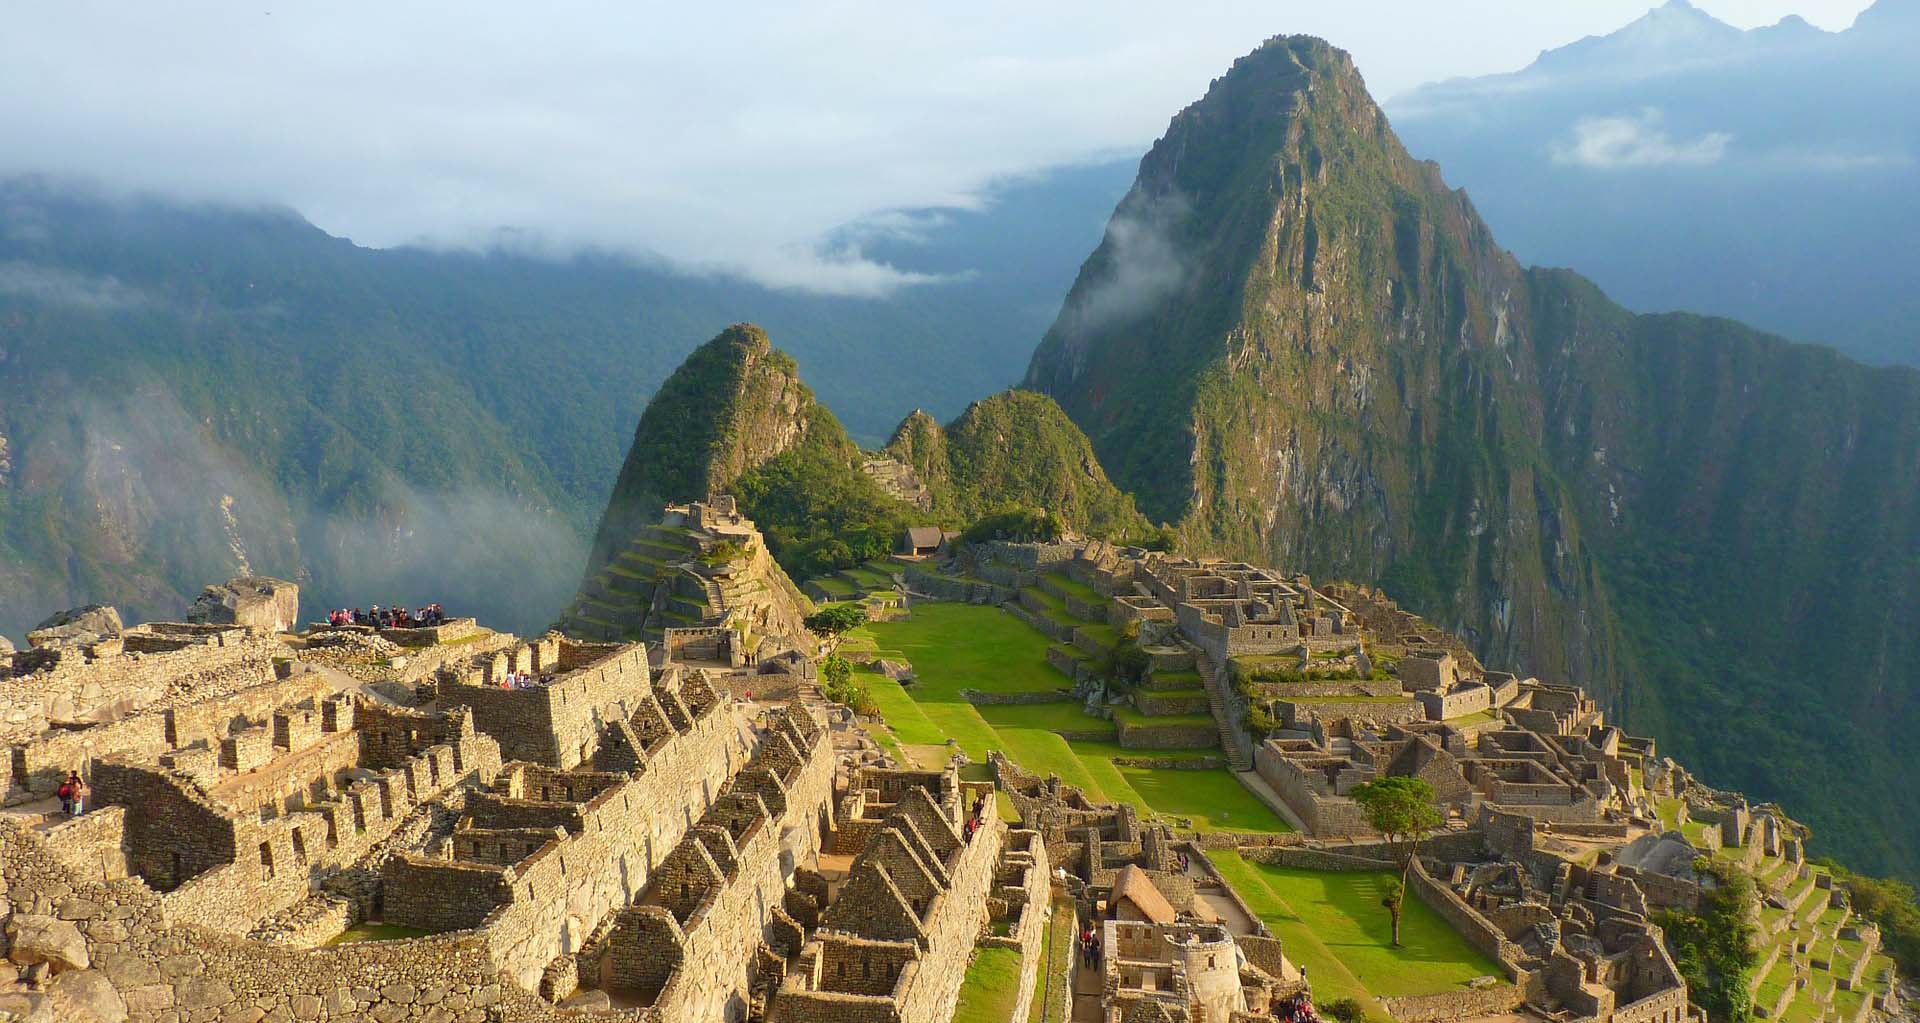  Machu Picchu tour in one day city of thr incas 